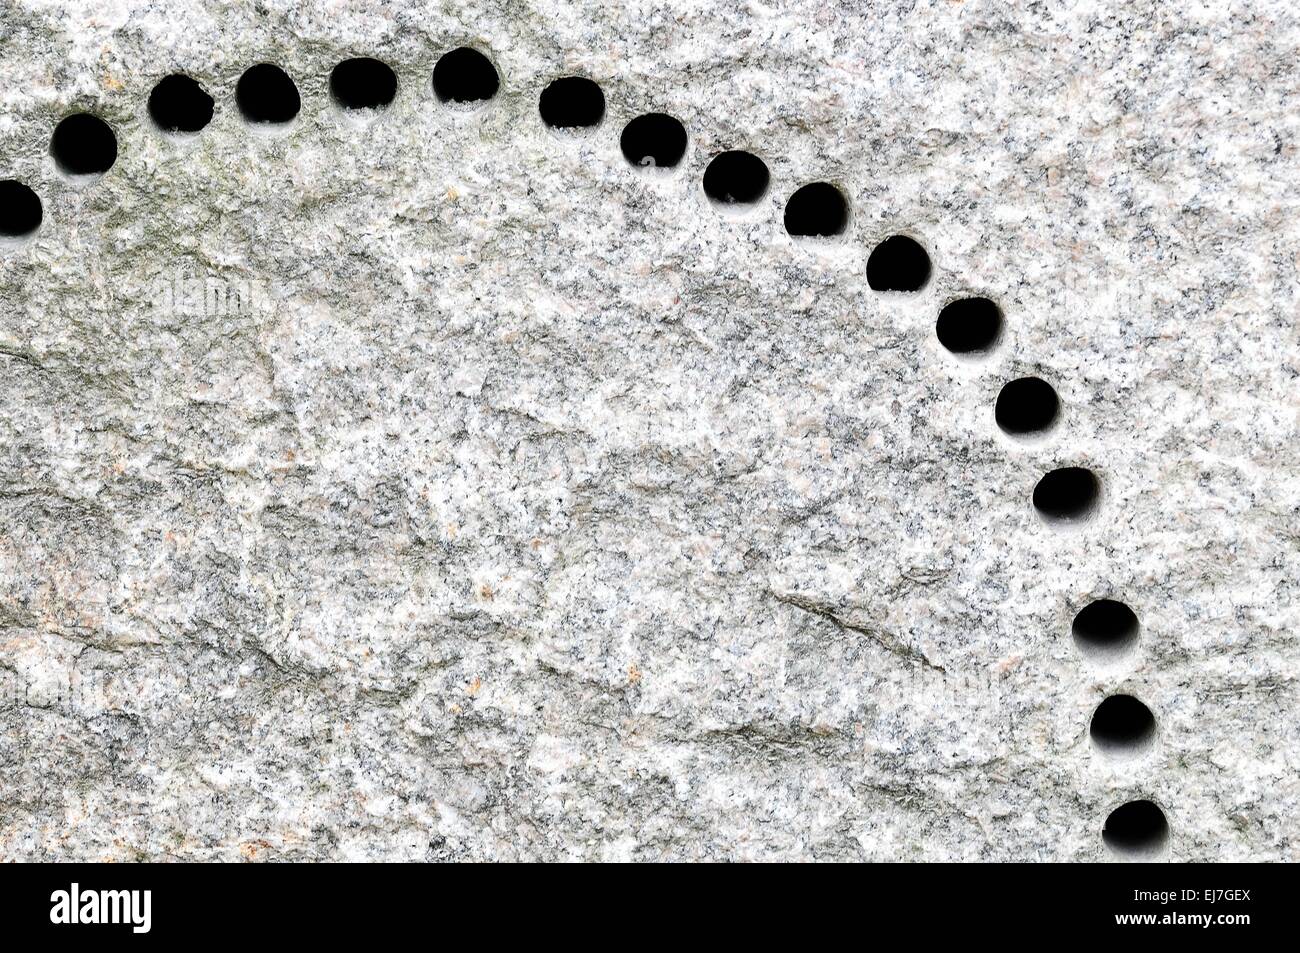 Drill holes in granite stone Stock Photo